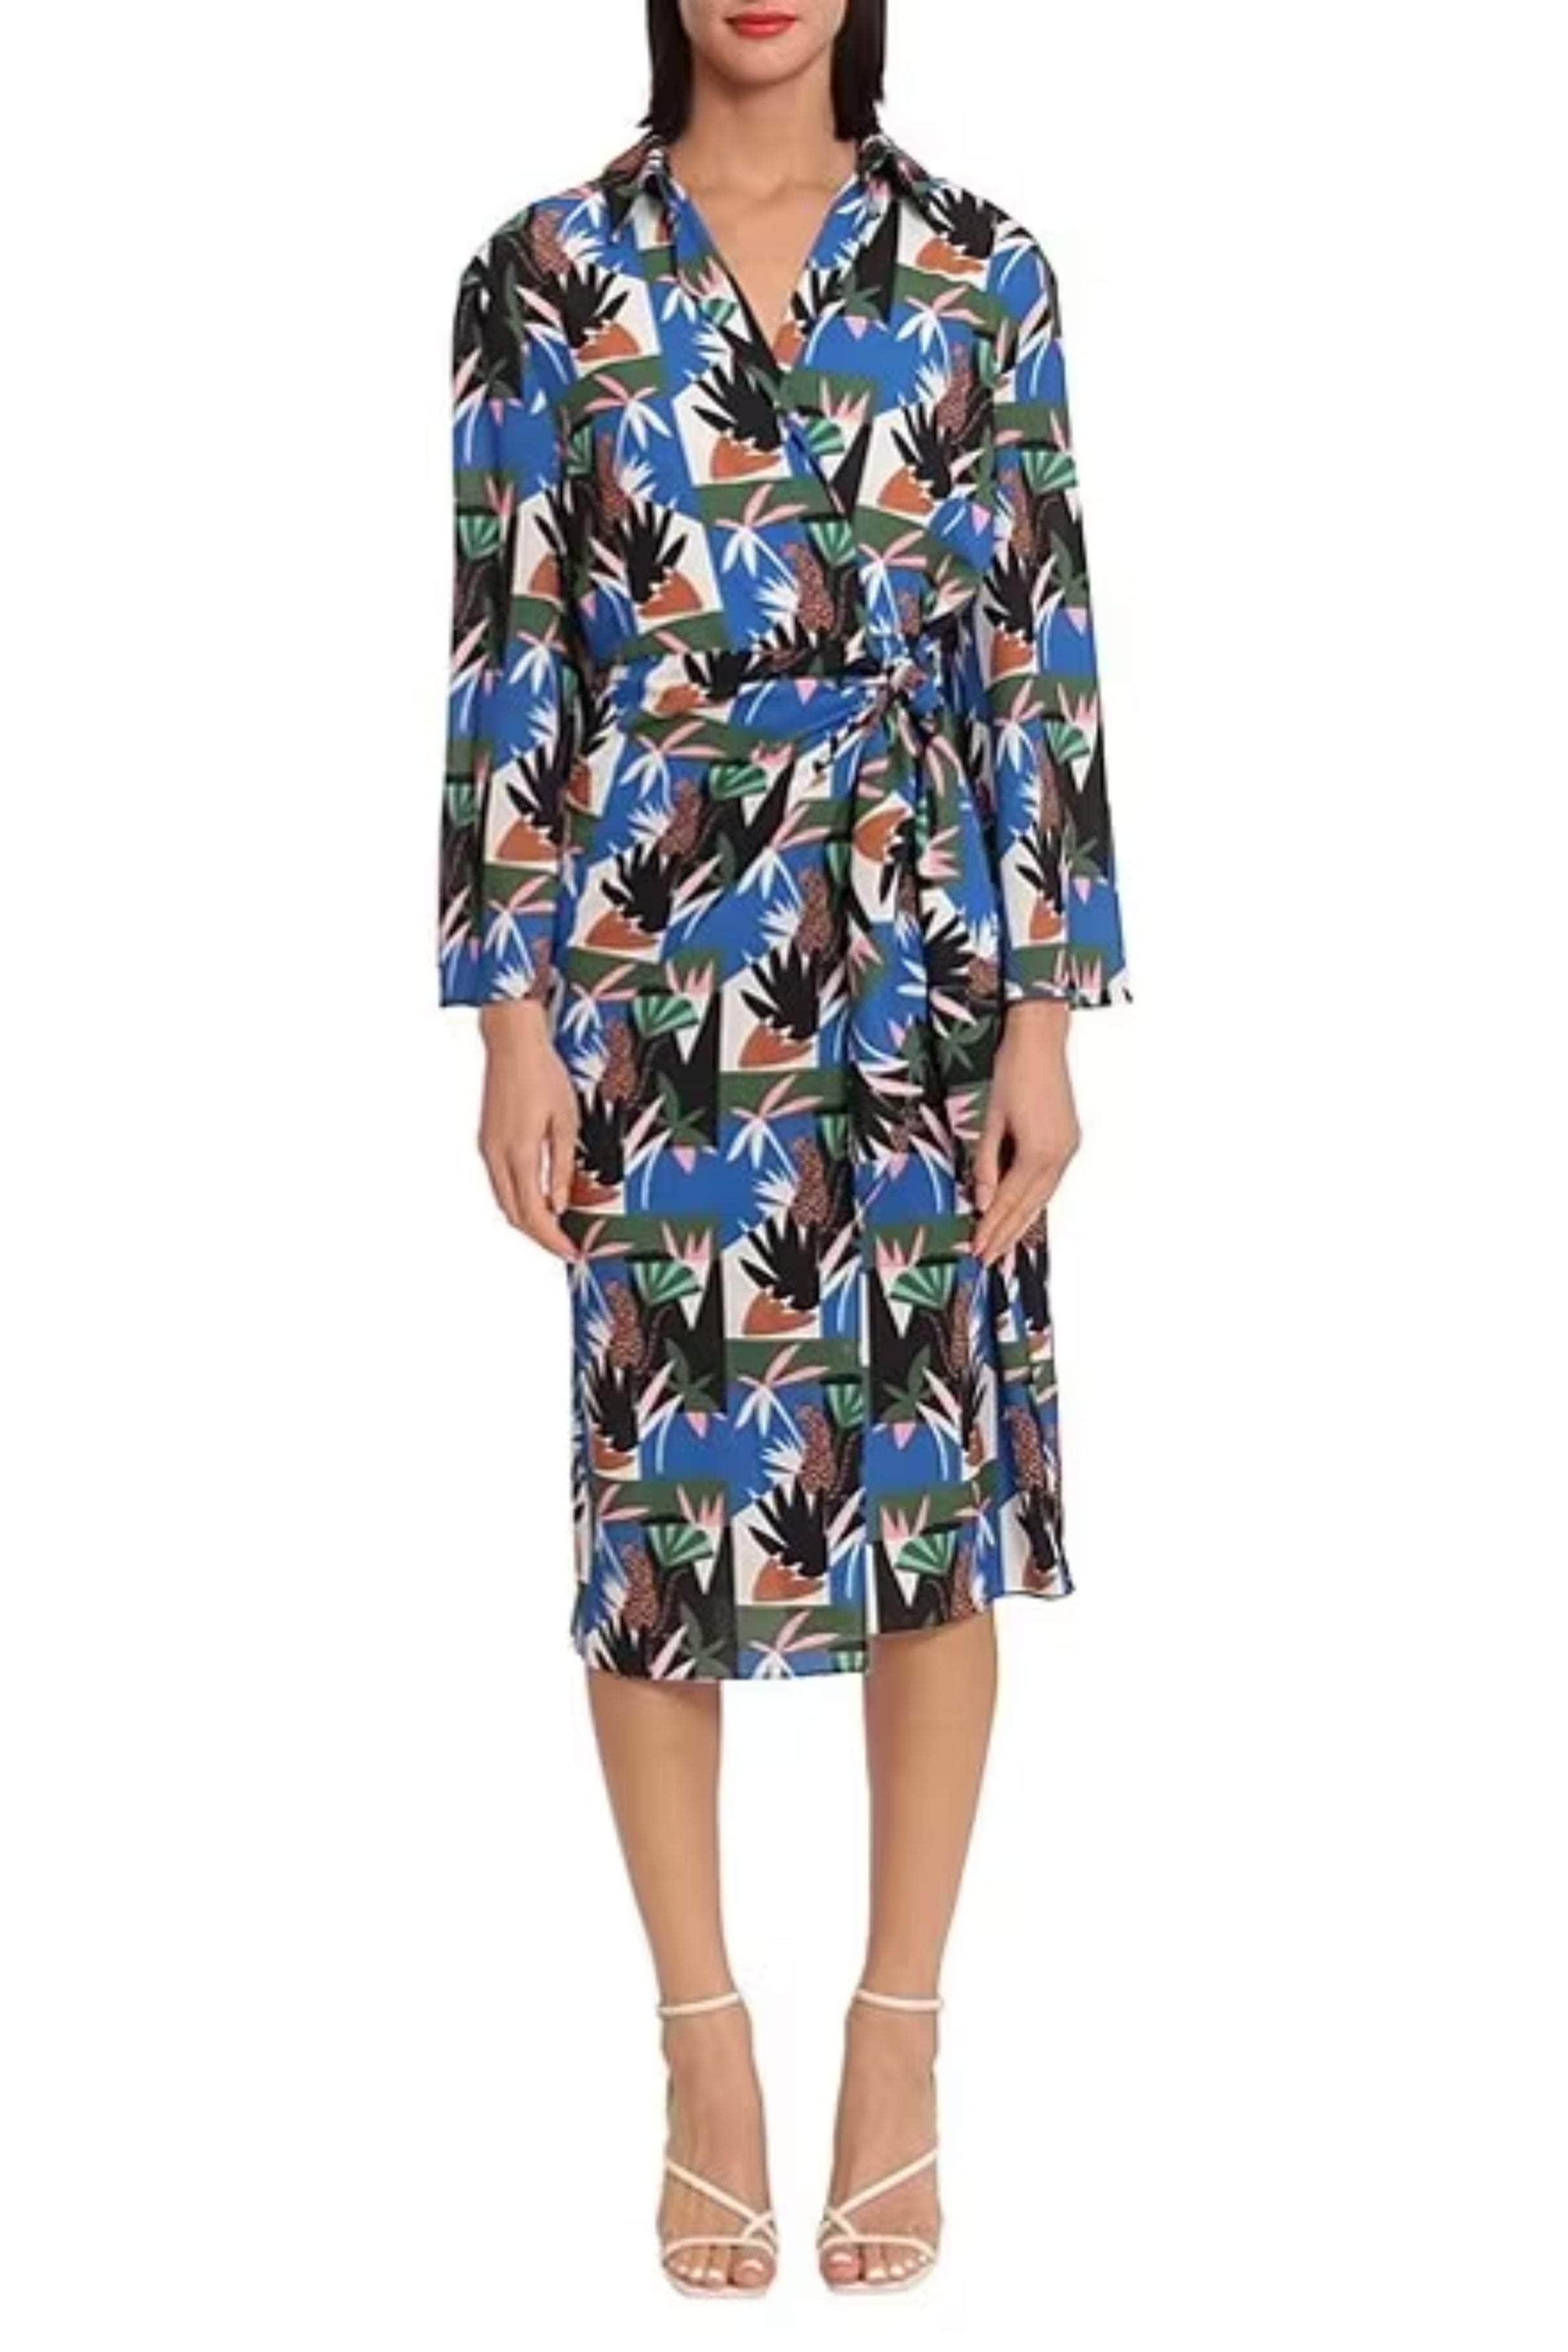 Donna Morgan D8248M - Jungle Print Long Sleeve Casual Dress
